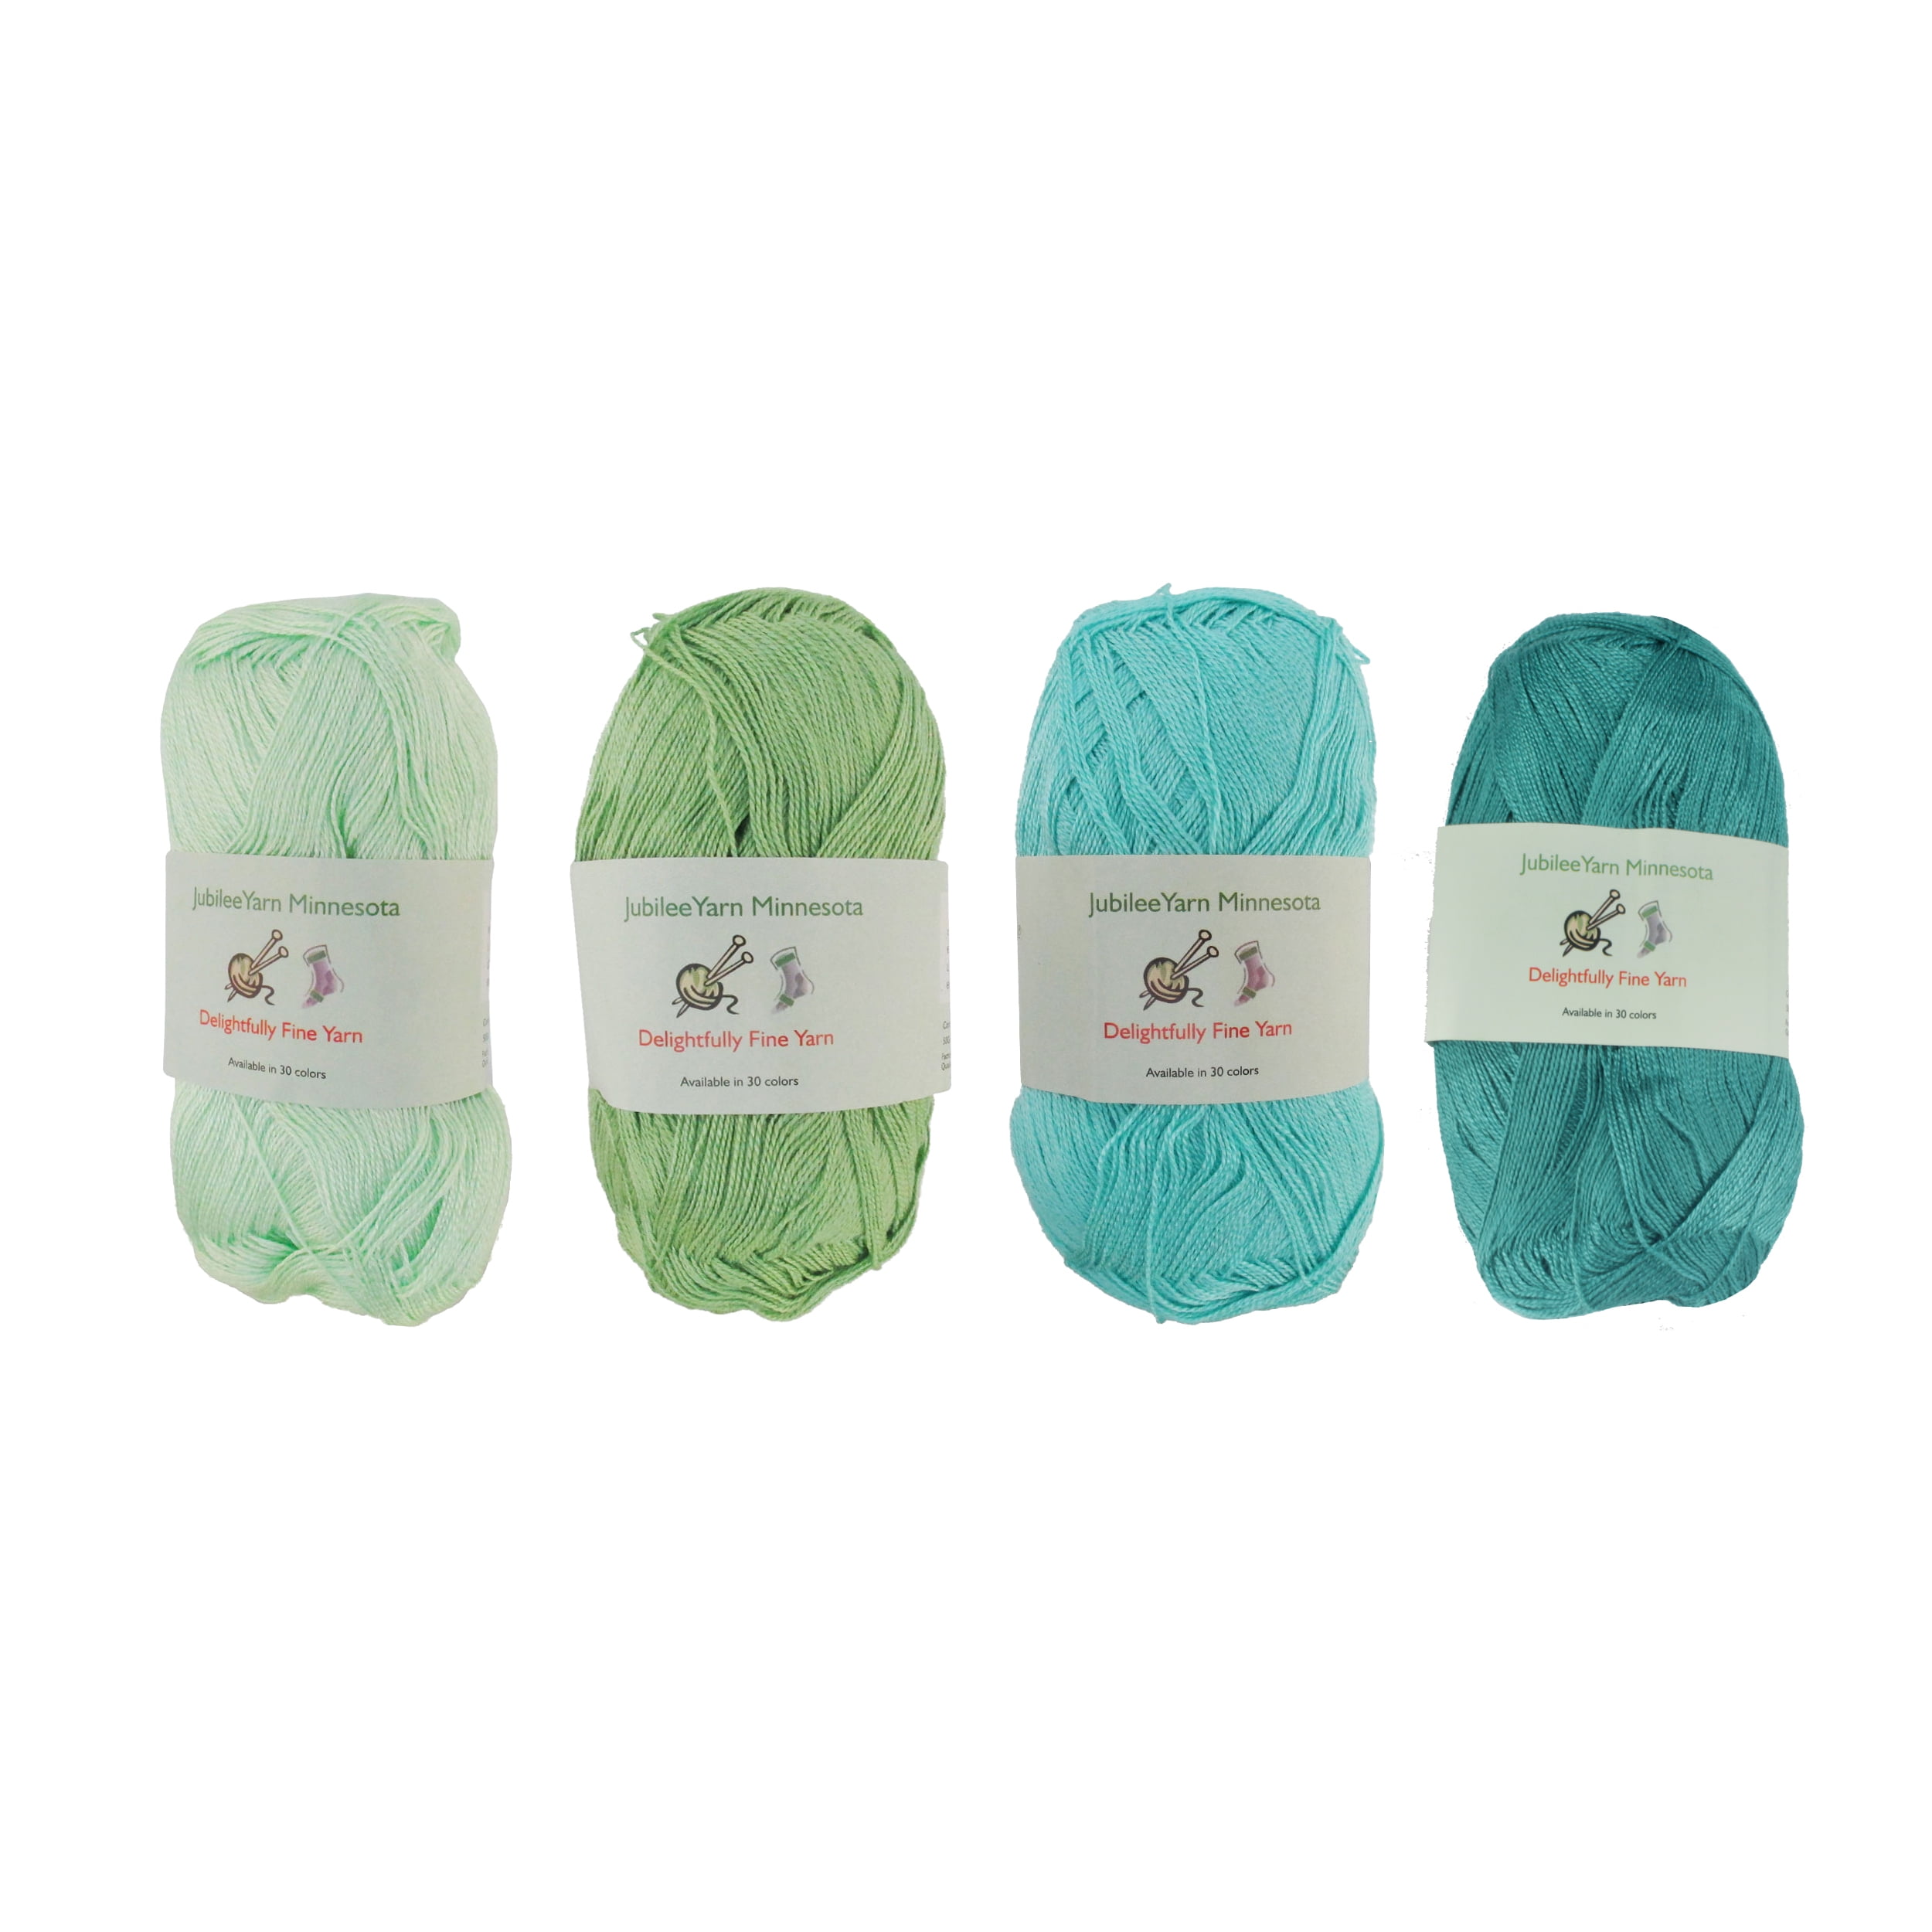 Product Details, Silken Cloud - Silk-Blend Yarn (70% Bombyx Silk & 30%  Cotton), 60/2X2, lace/thread weight, Natural (Undyed), Yarns - Undyed